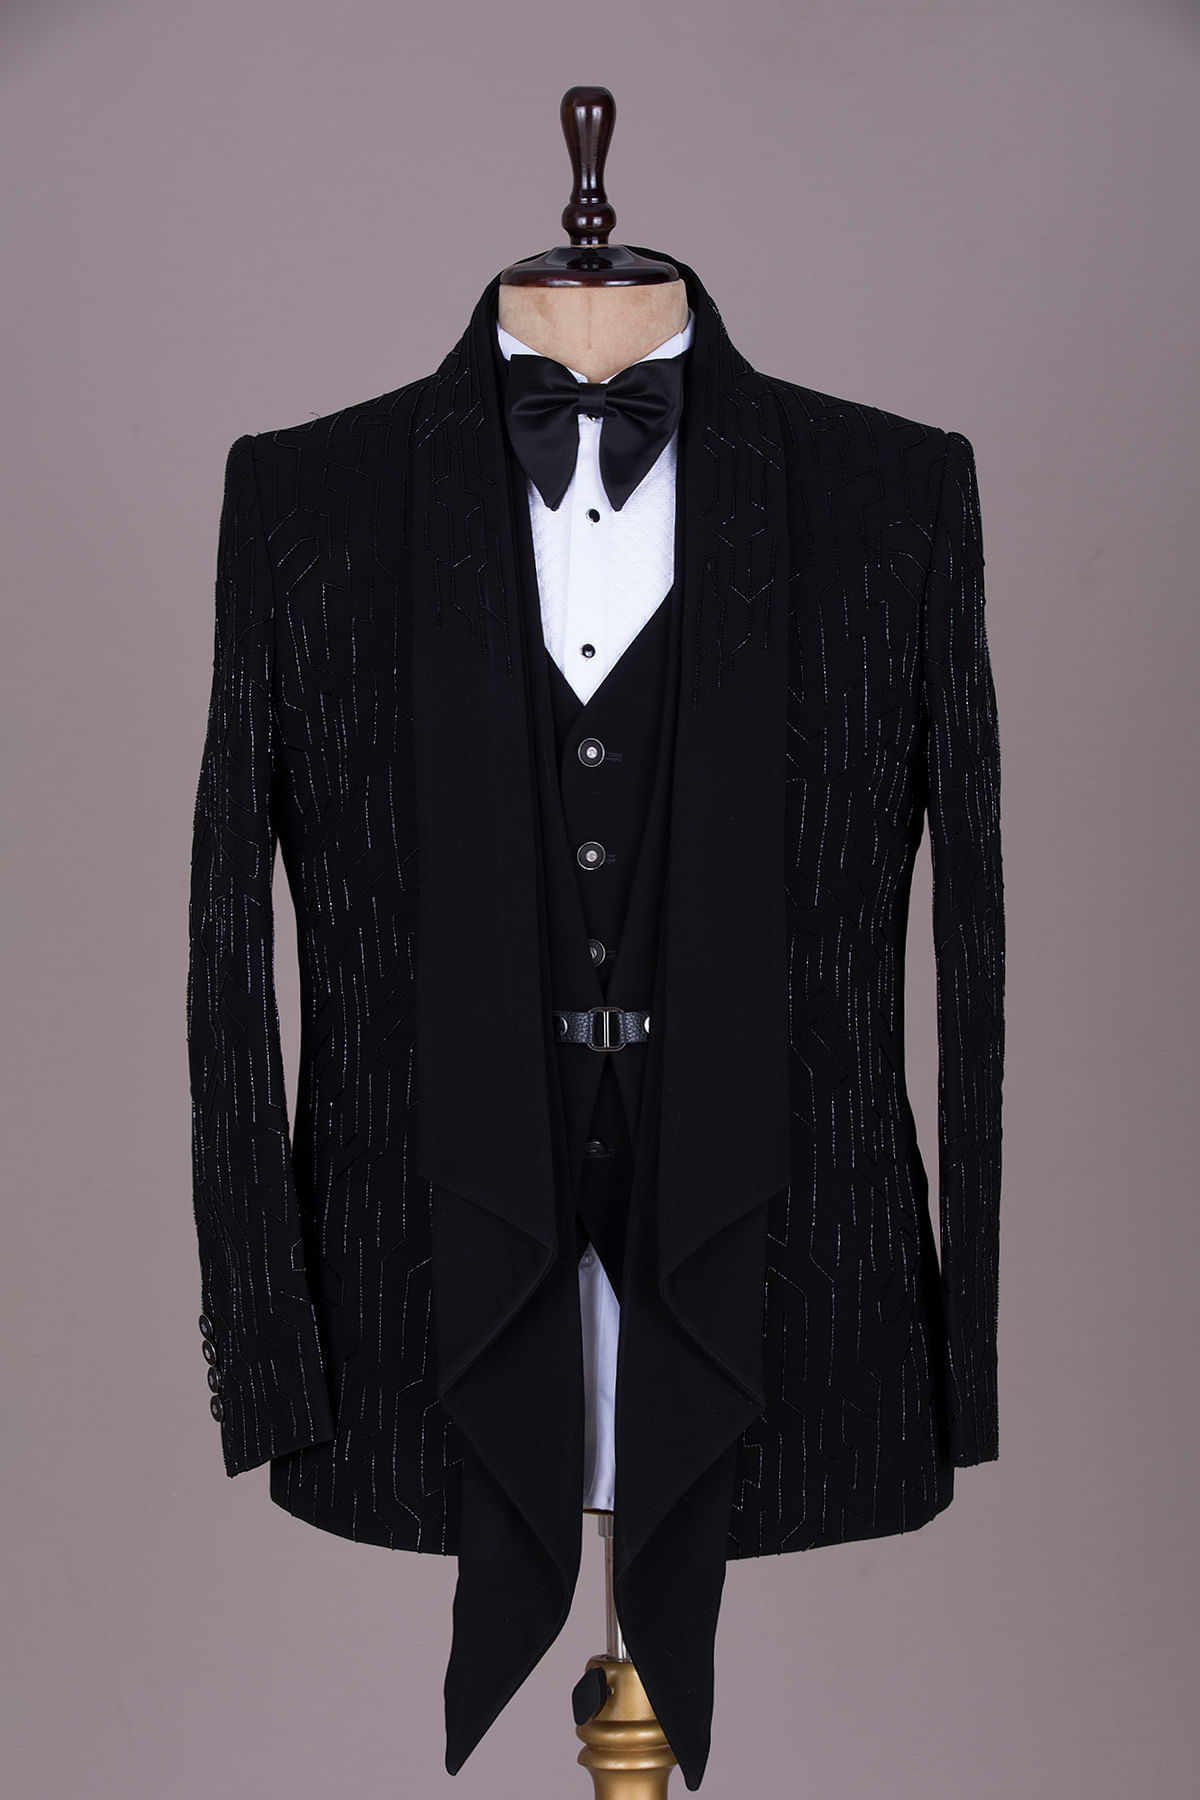 Black Cutdana Embroidered Italian Tuxedo Suit